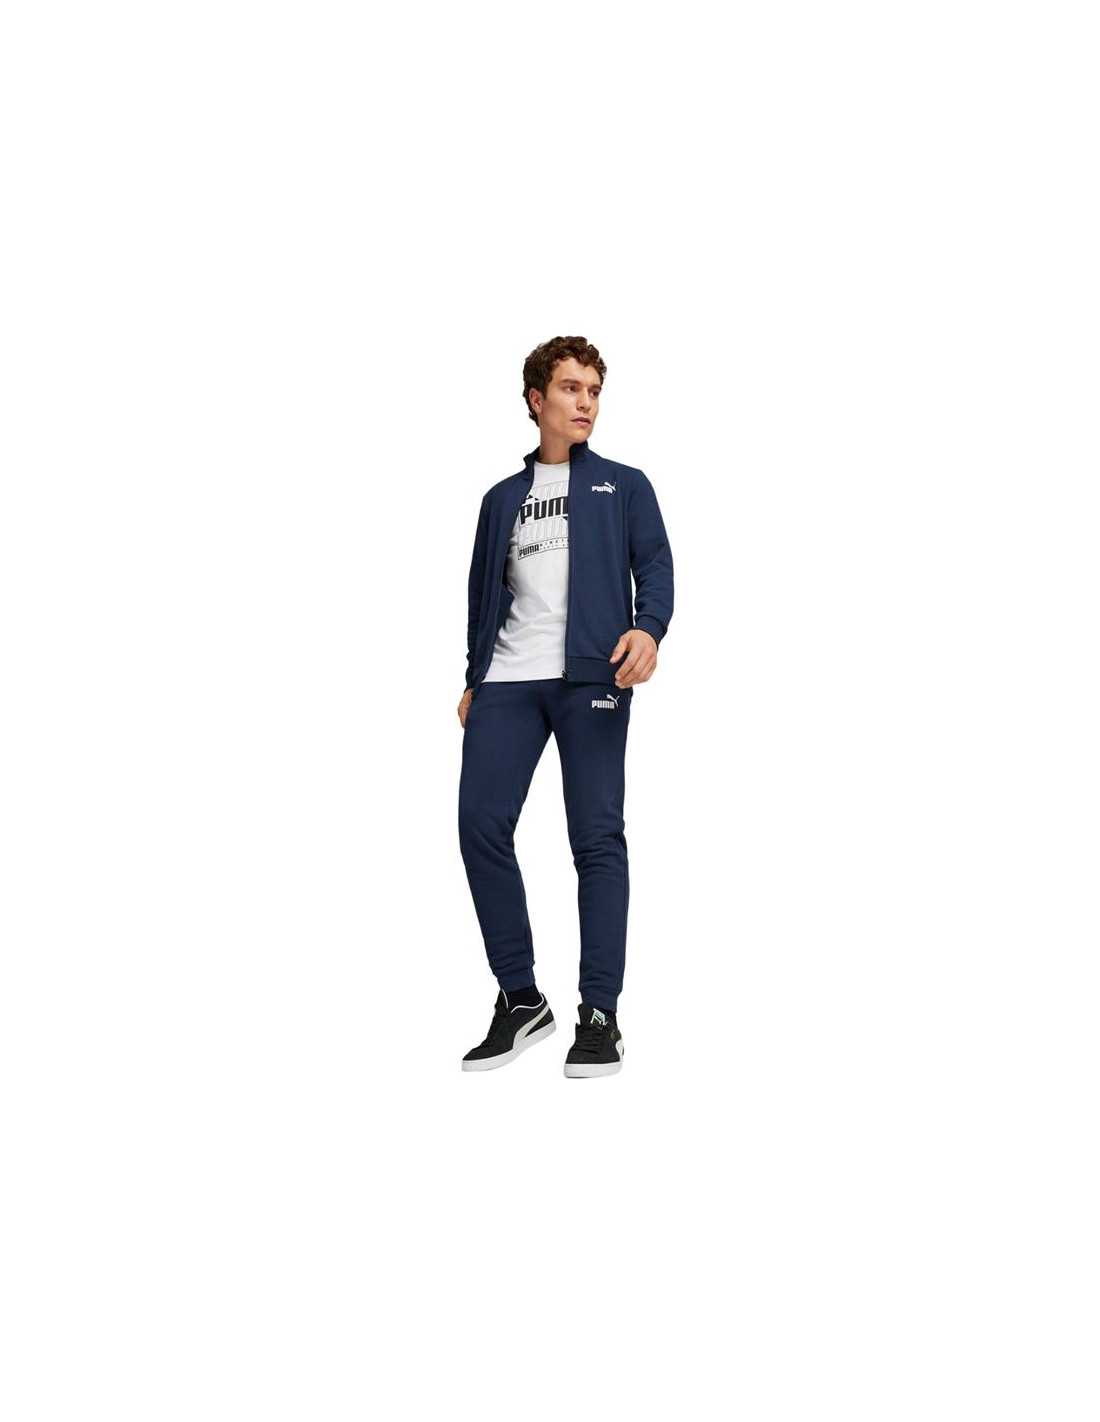 PUMA - Chándal azul marino Clean Sweat Suit 585841 06 Hombre